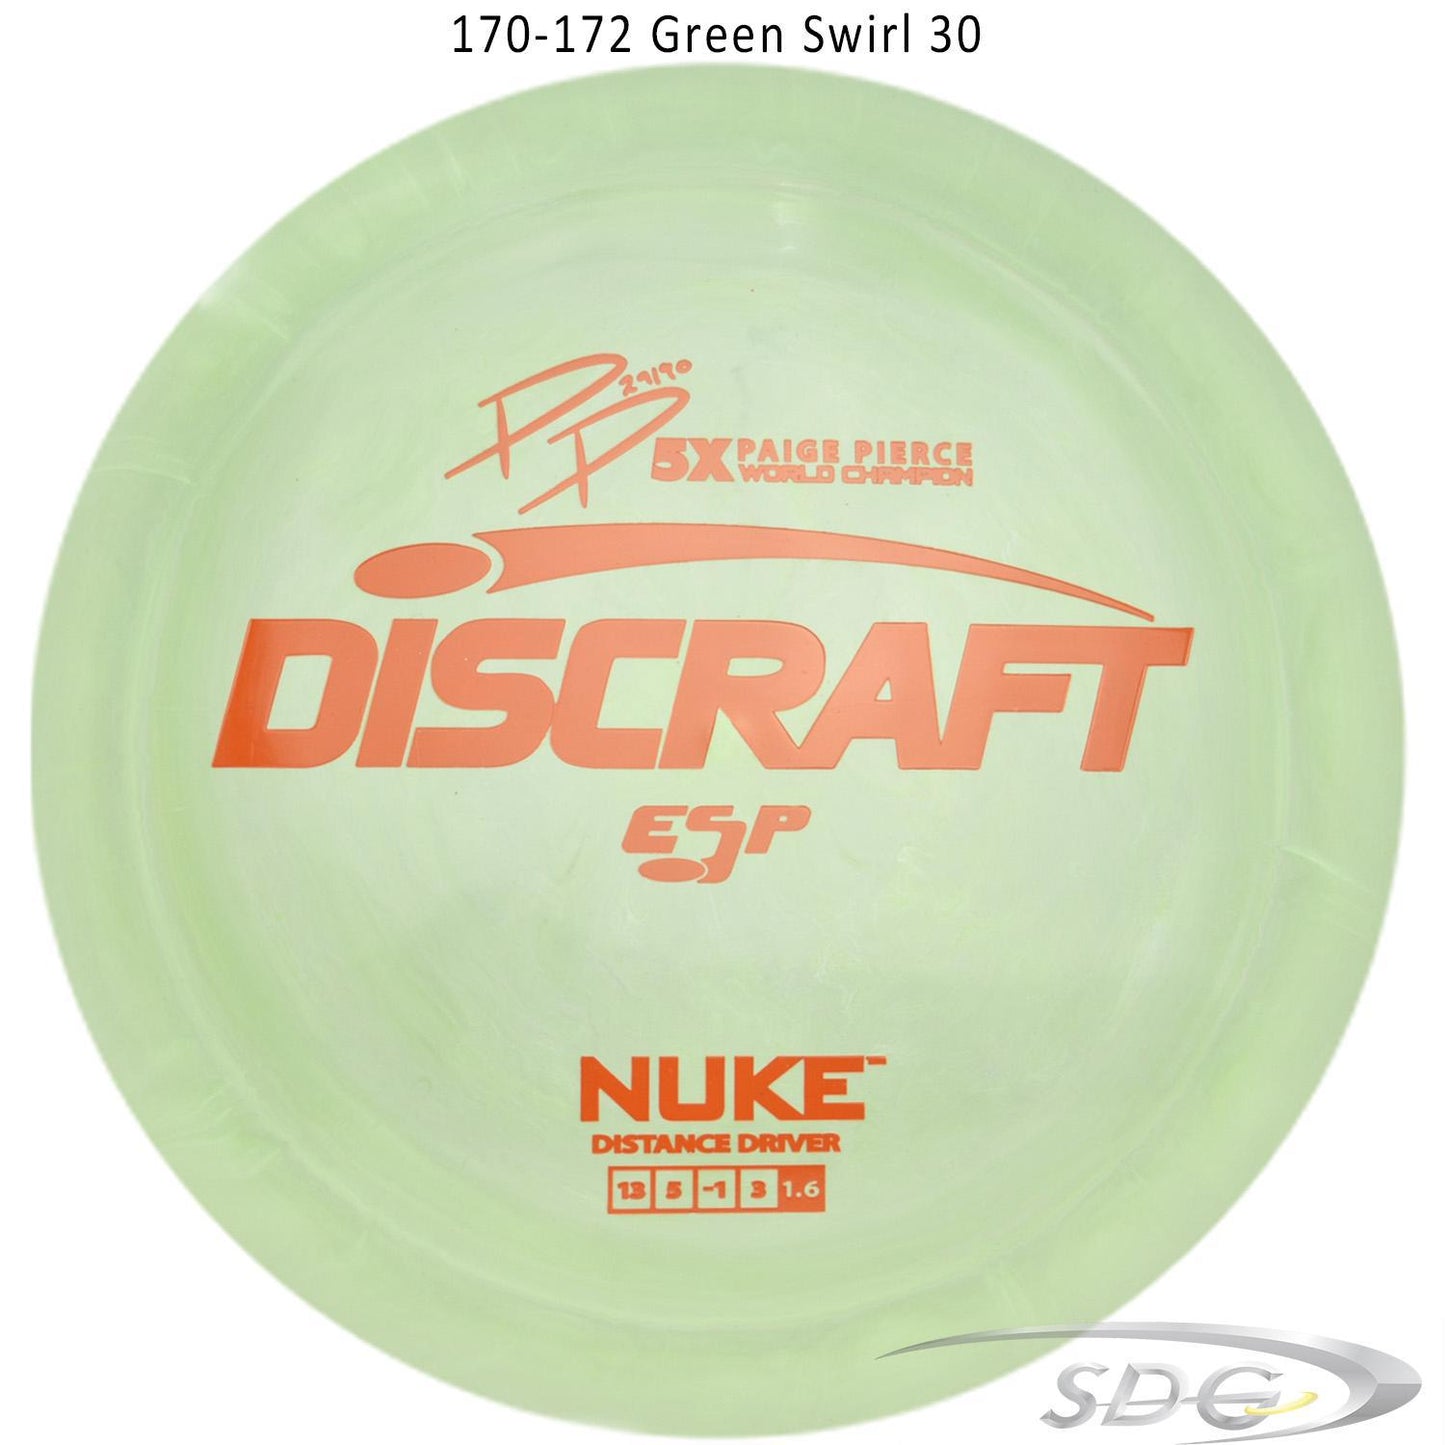 discraft-esp-nuke-paige-pierce-signature-disc-golf-distance-driver 170-172 Green Swirl 30